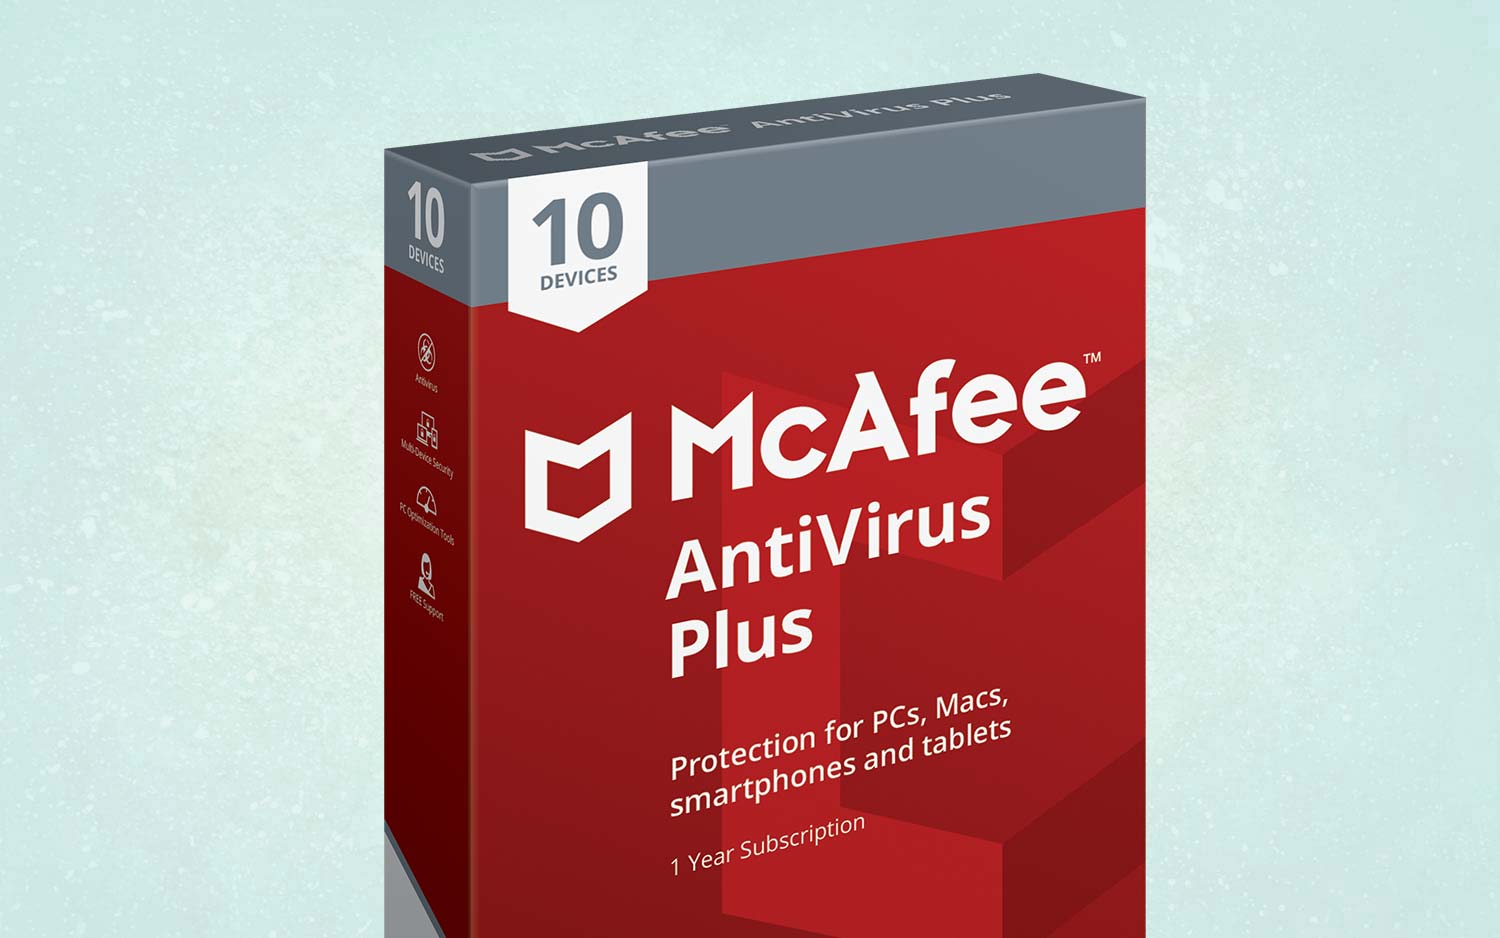 Mcafee antivirus